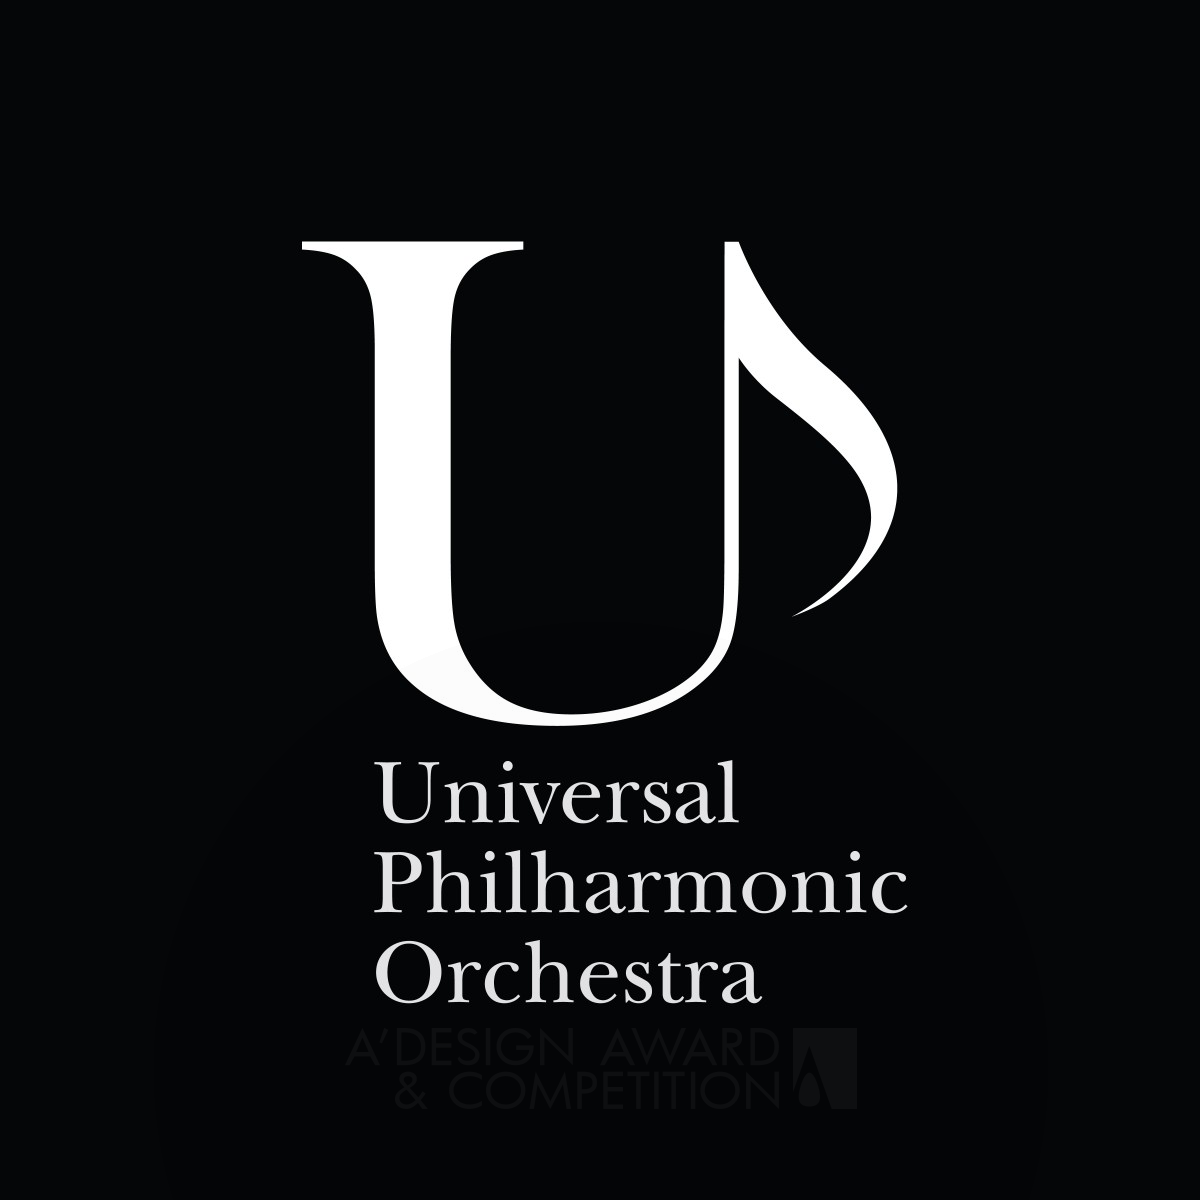 Universal Philharmonic Orchestra Corporate Identity